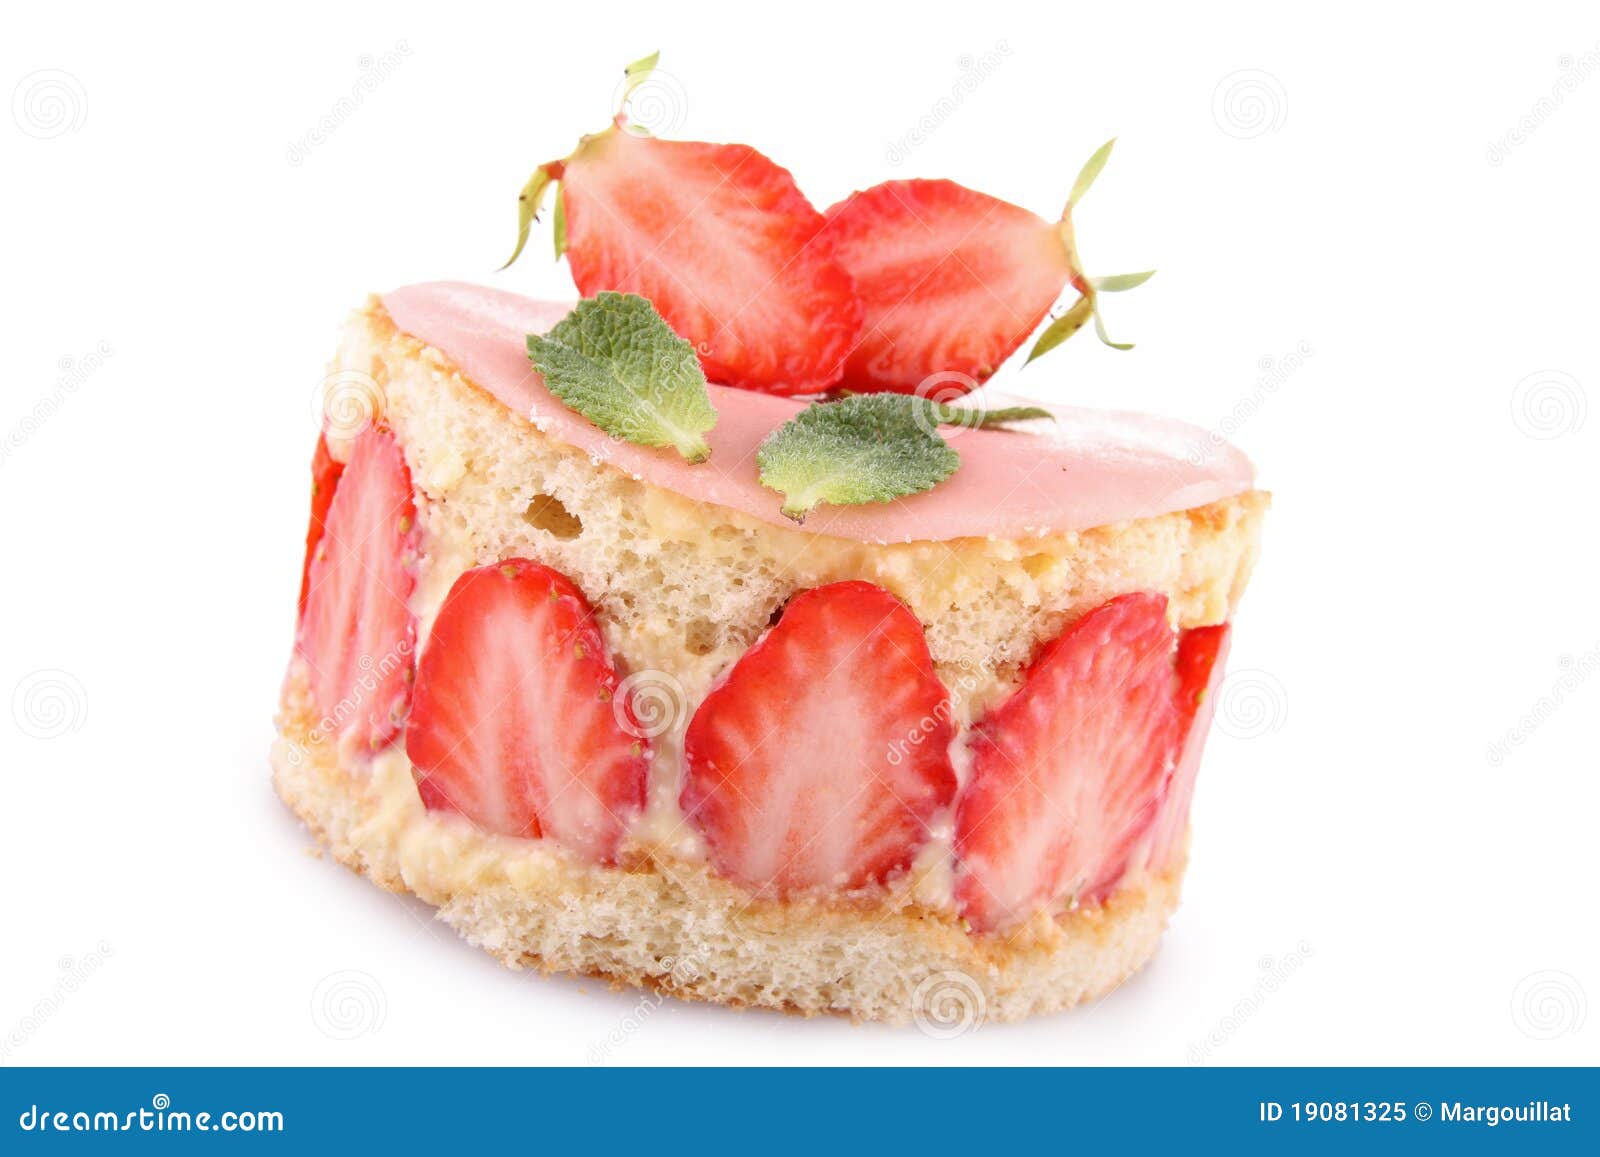 strawberry shortcake wallpaper